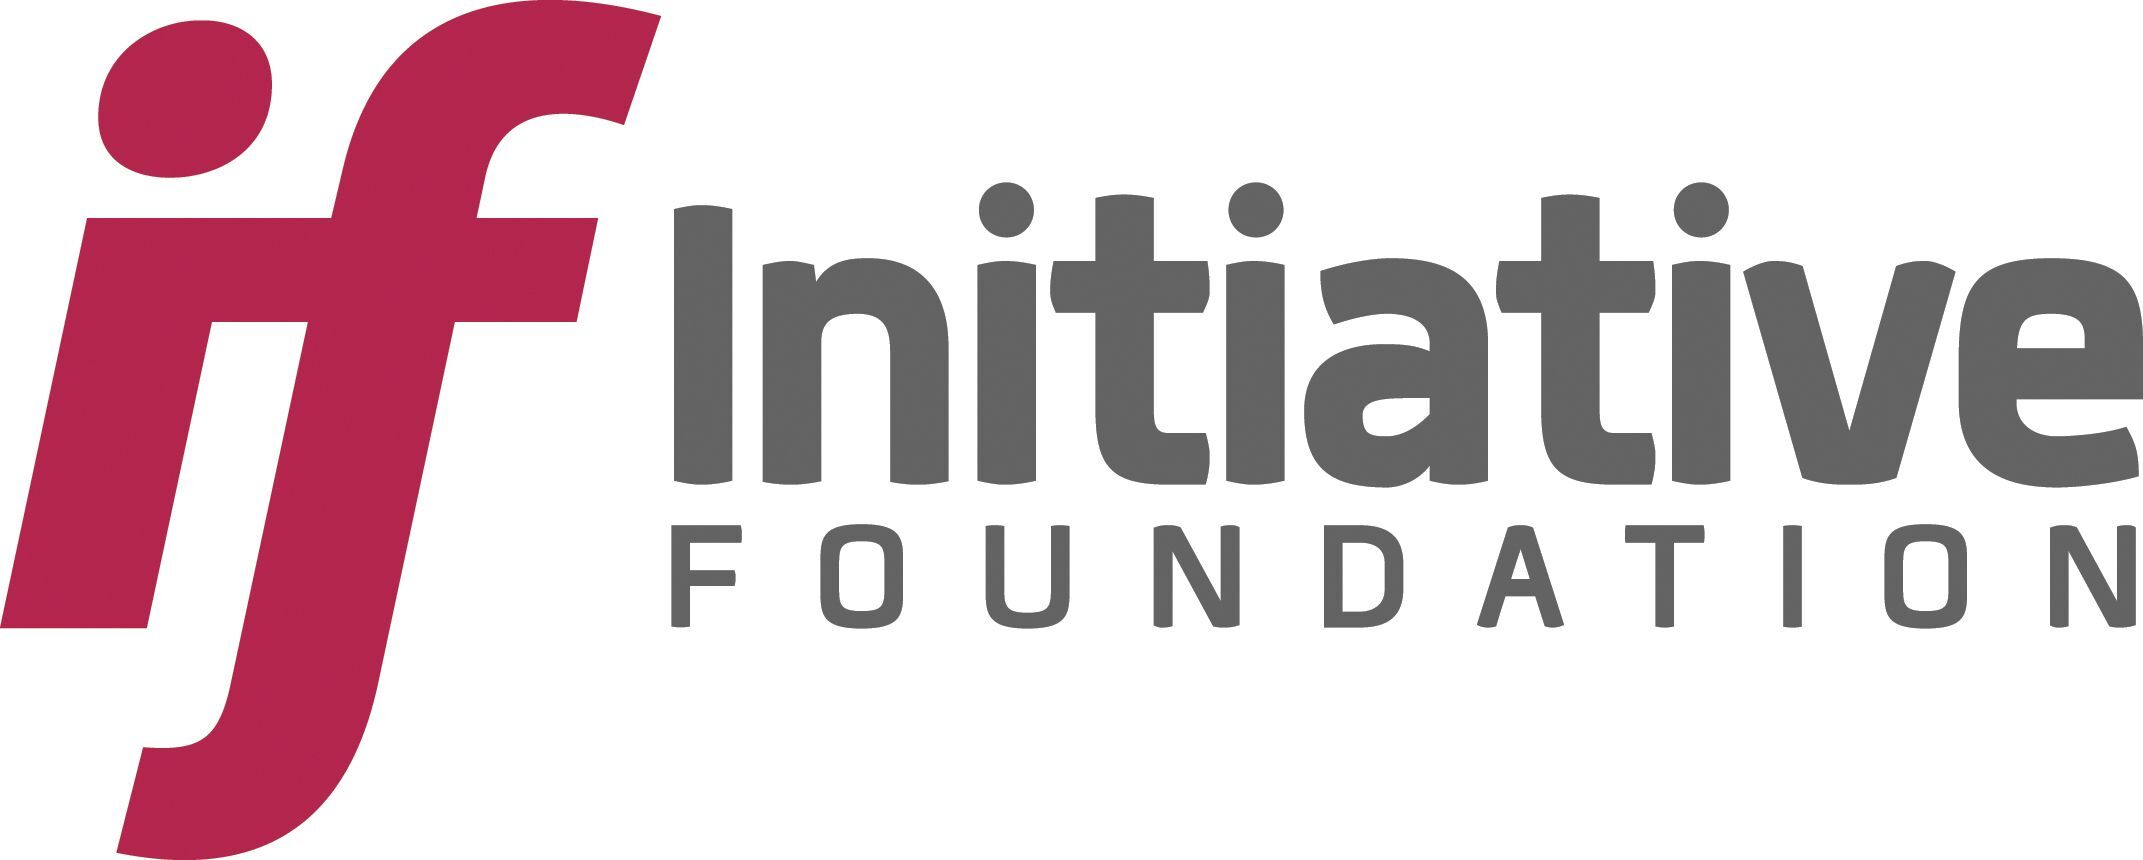 Initiative Foundation